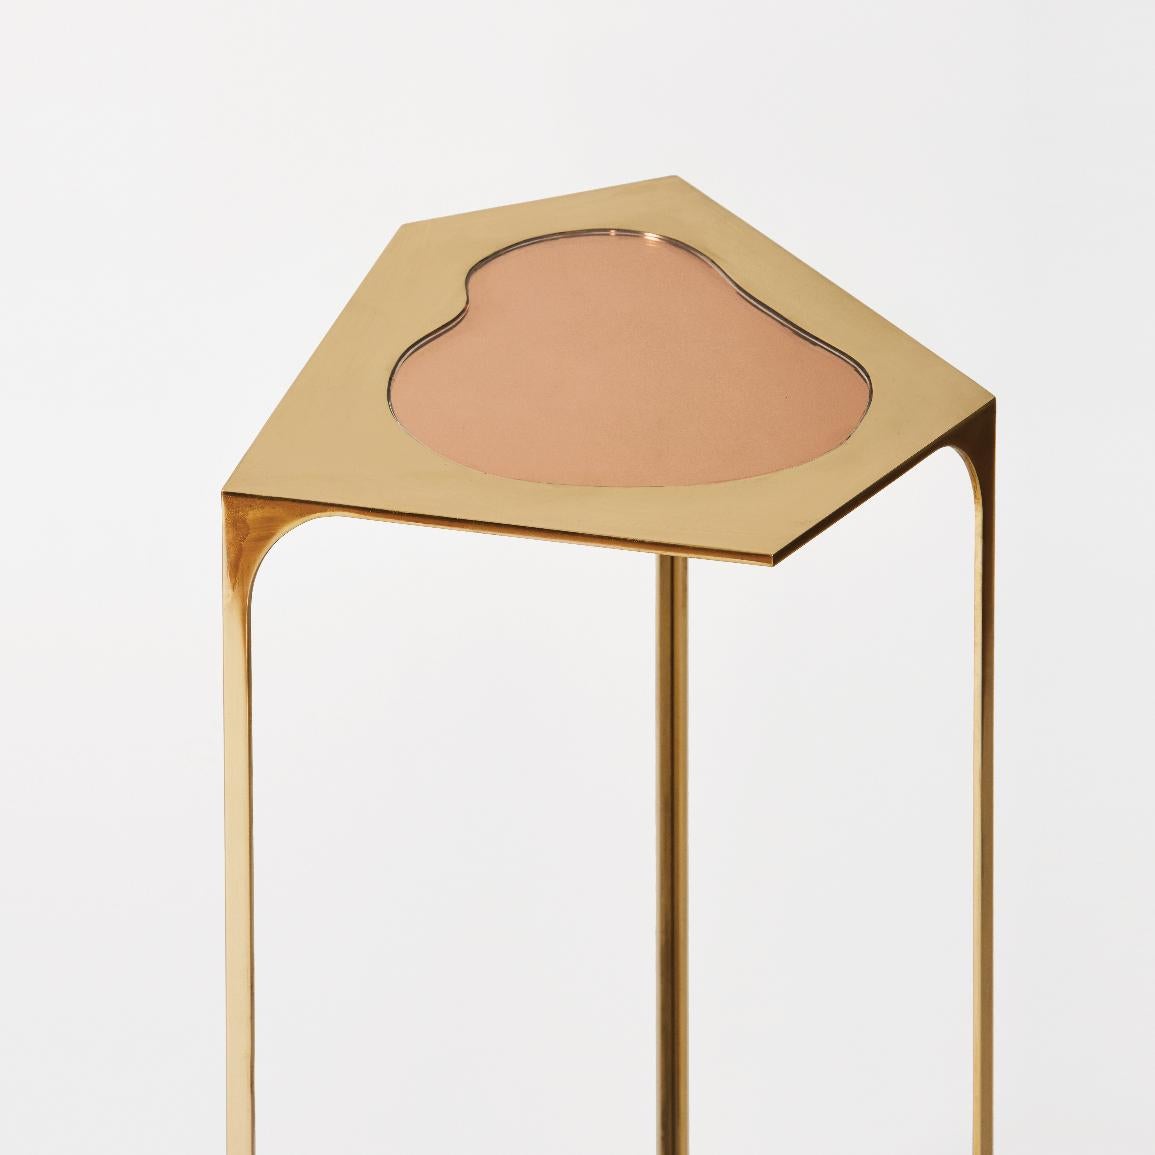 Gem table in peach mirror and brass by Cam Crockford 

Materials: Brass, peach mirror
Dimensions: 13 W x 12 D x 17 H inches.